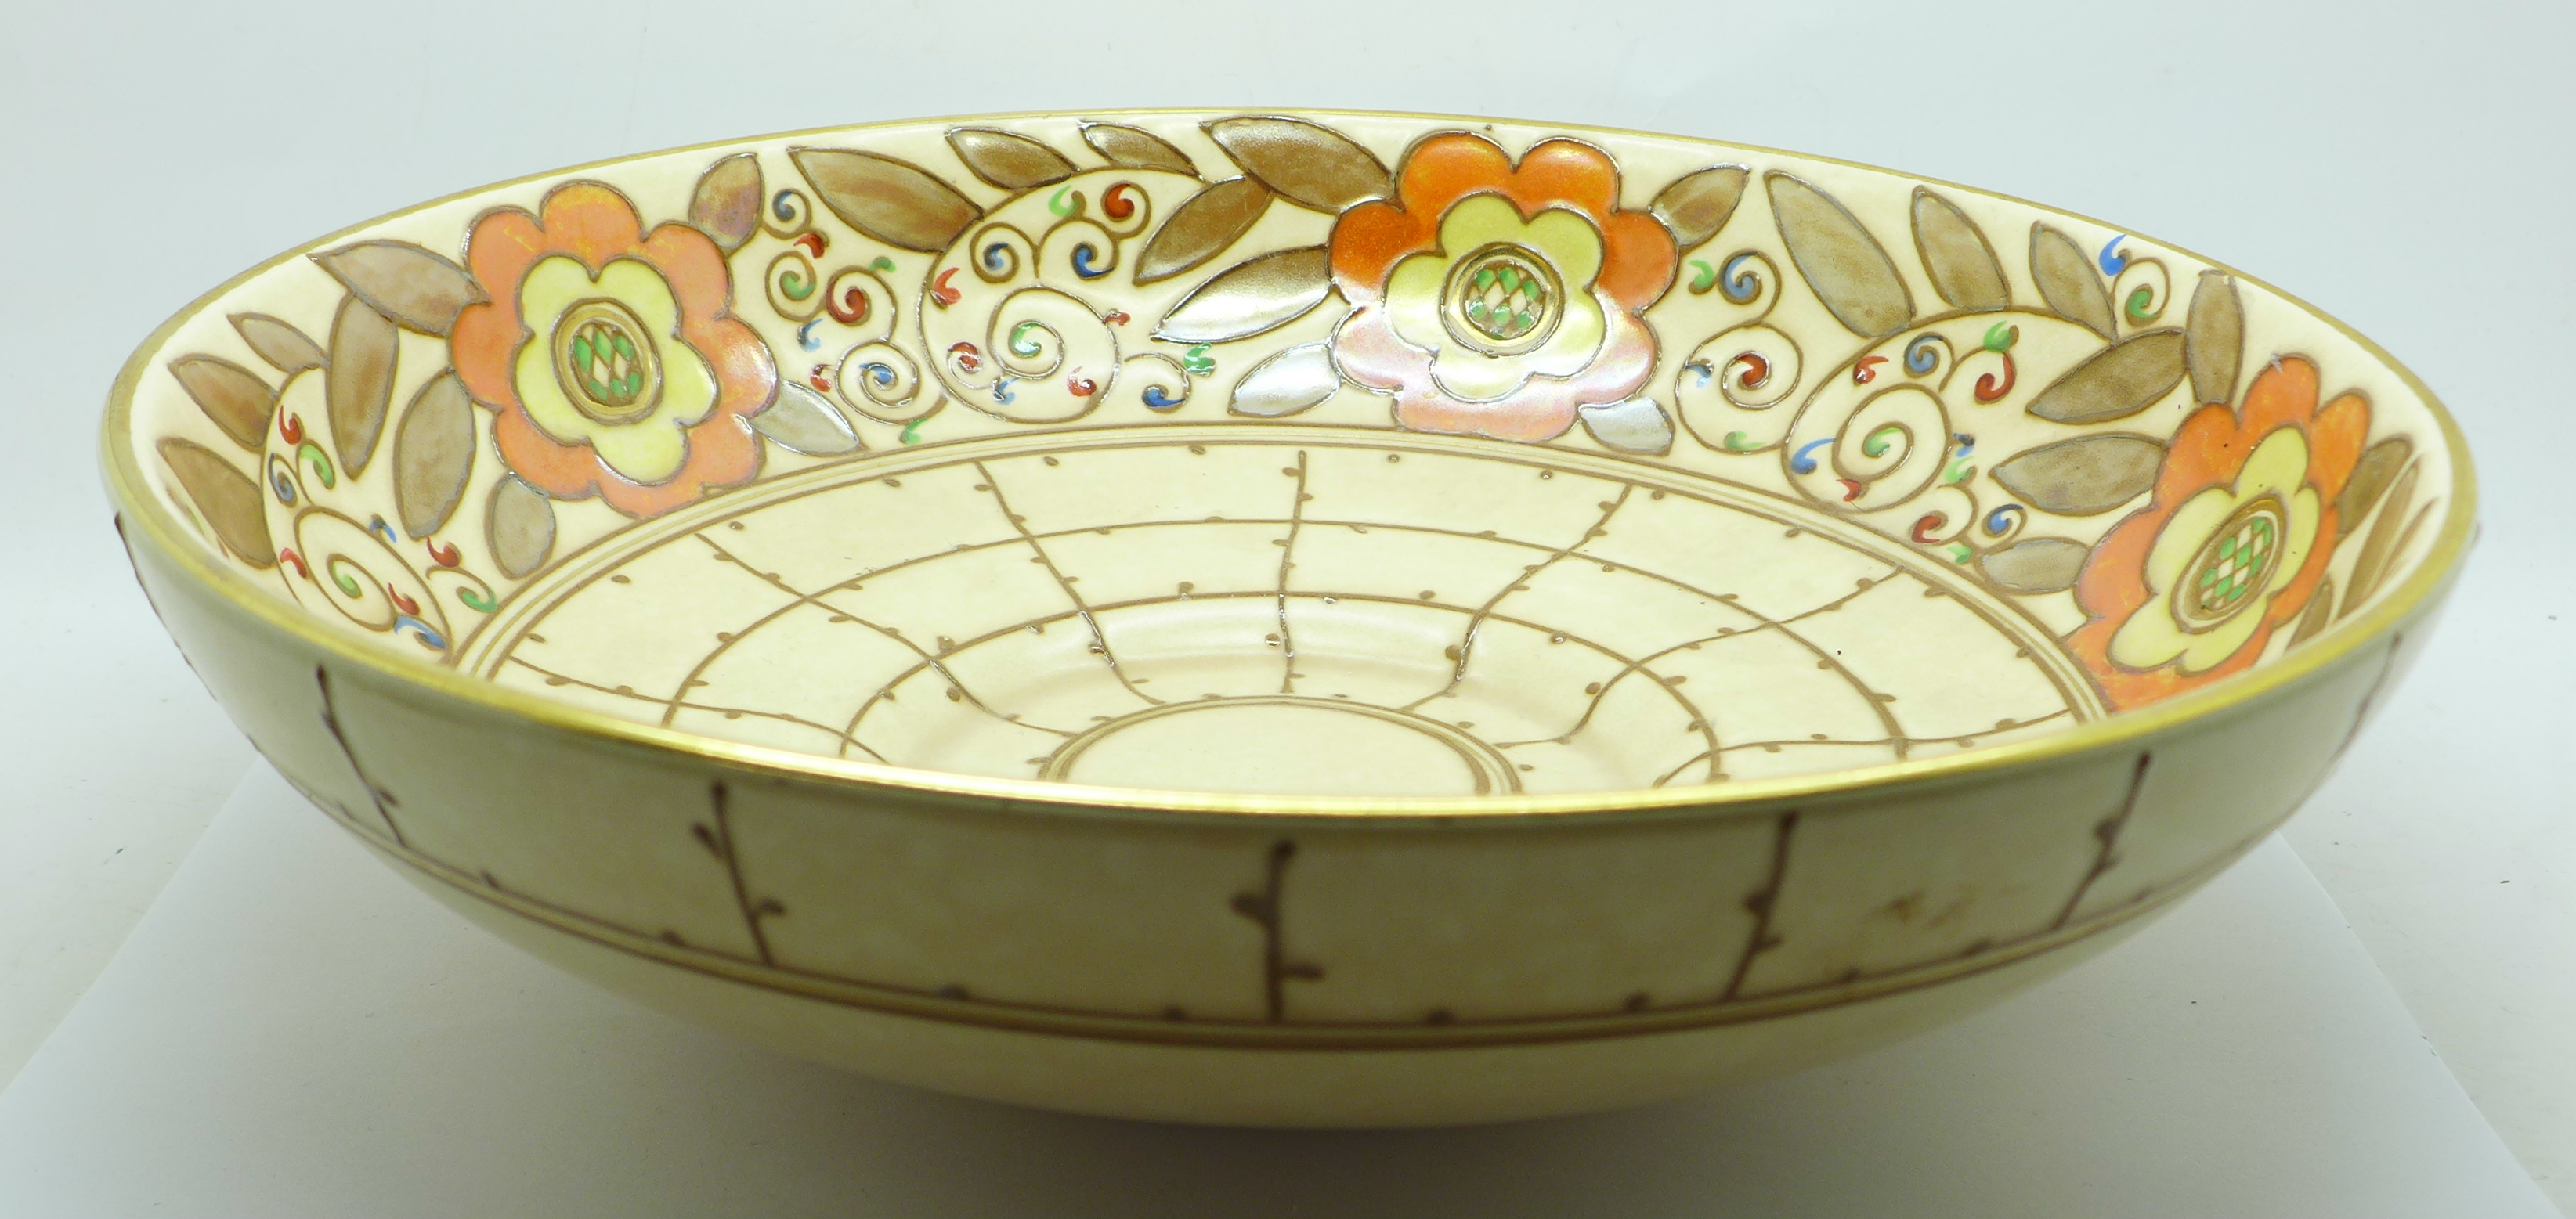 A Charlotte Rhead bowl, 29cm diameter